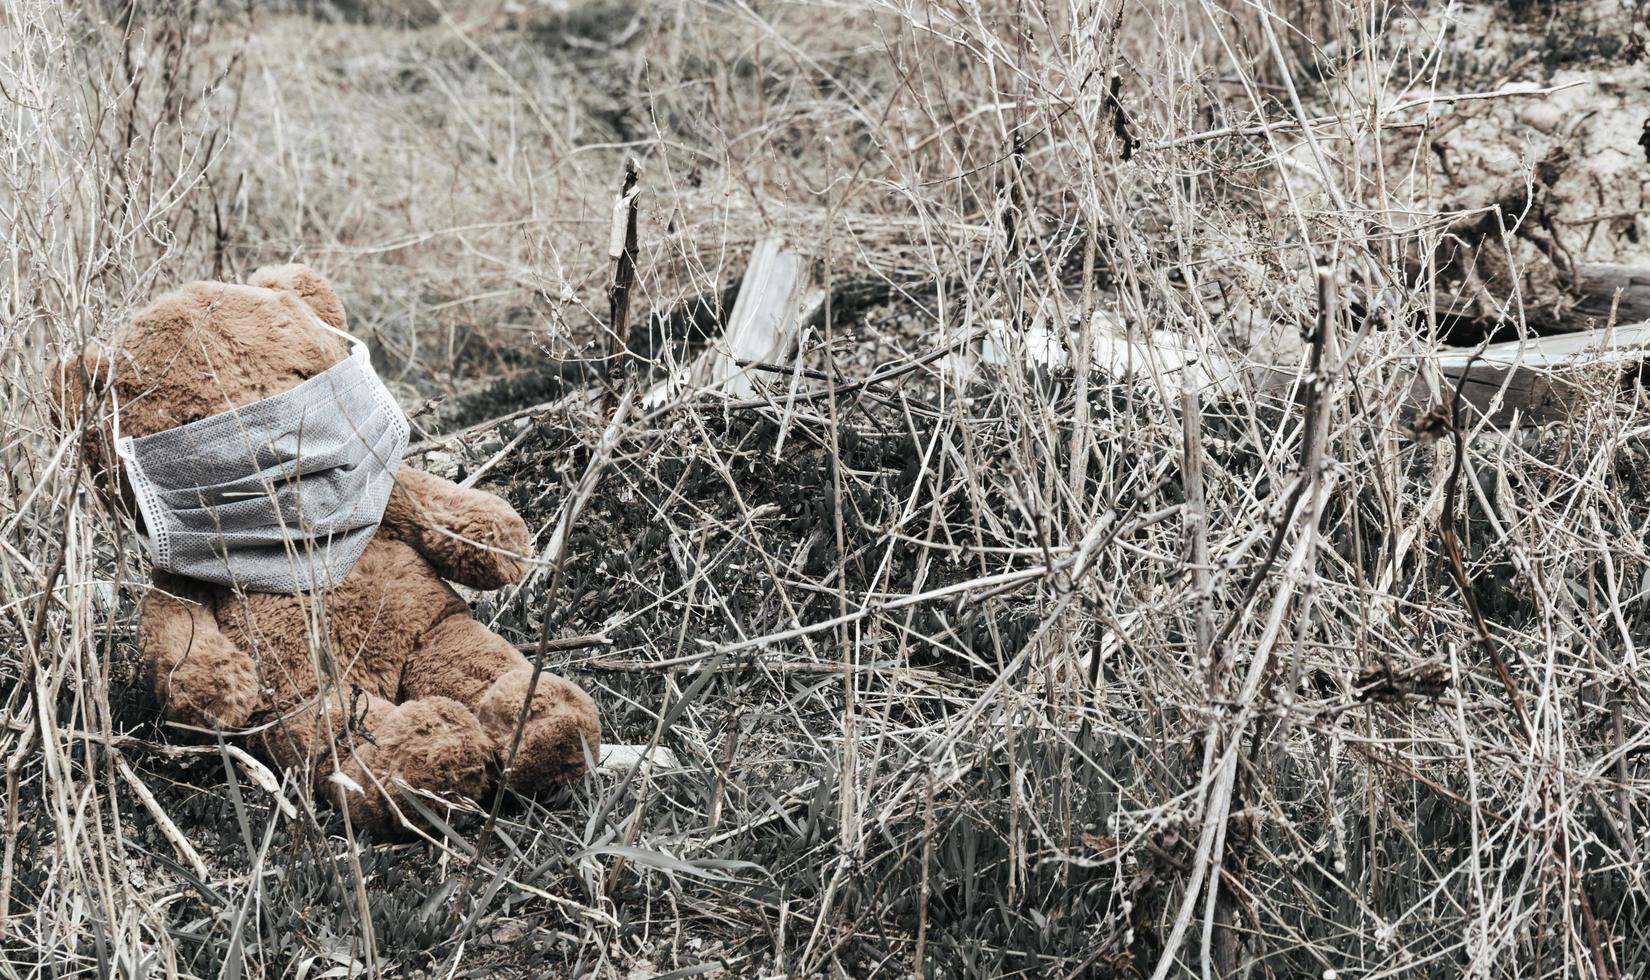 Teddy bear in medical mask sitting in garbage photo